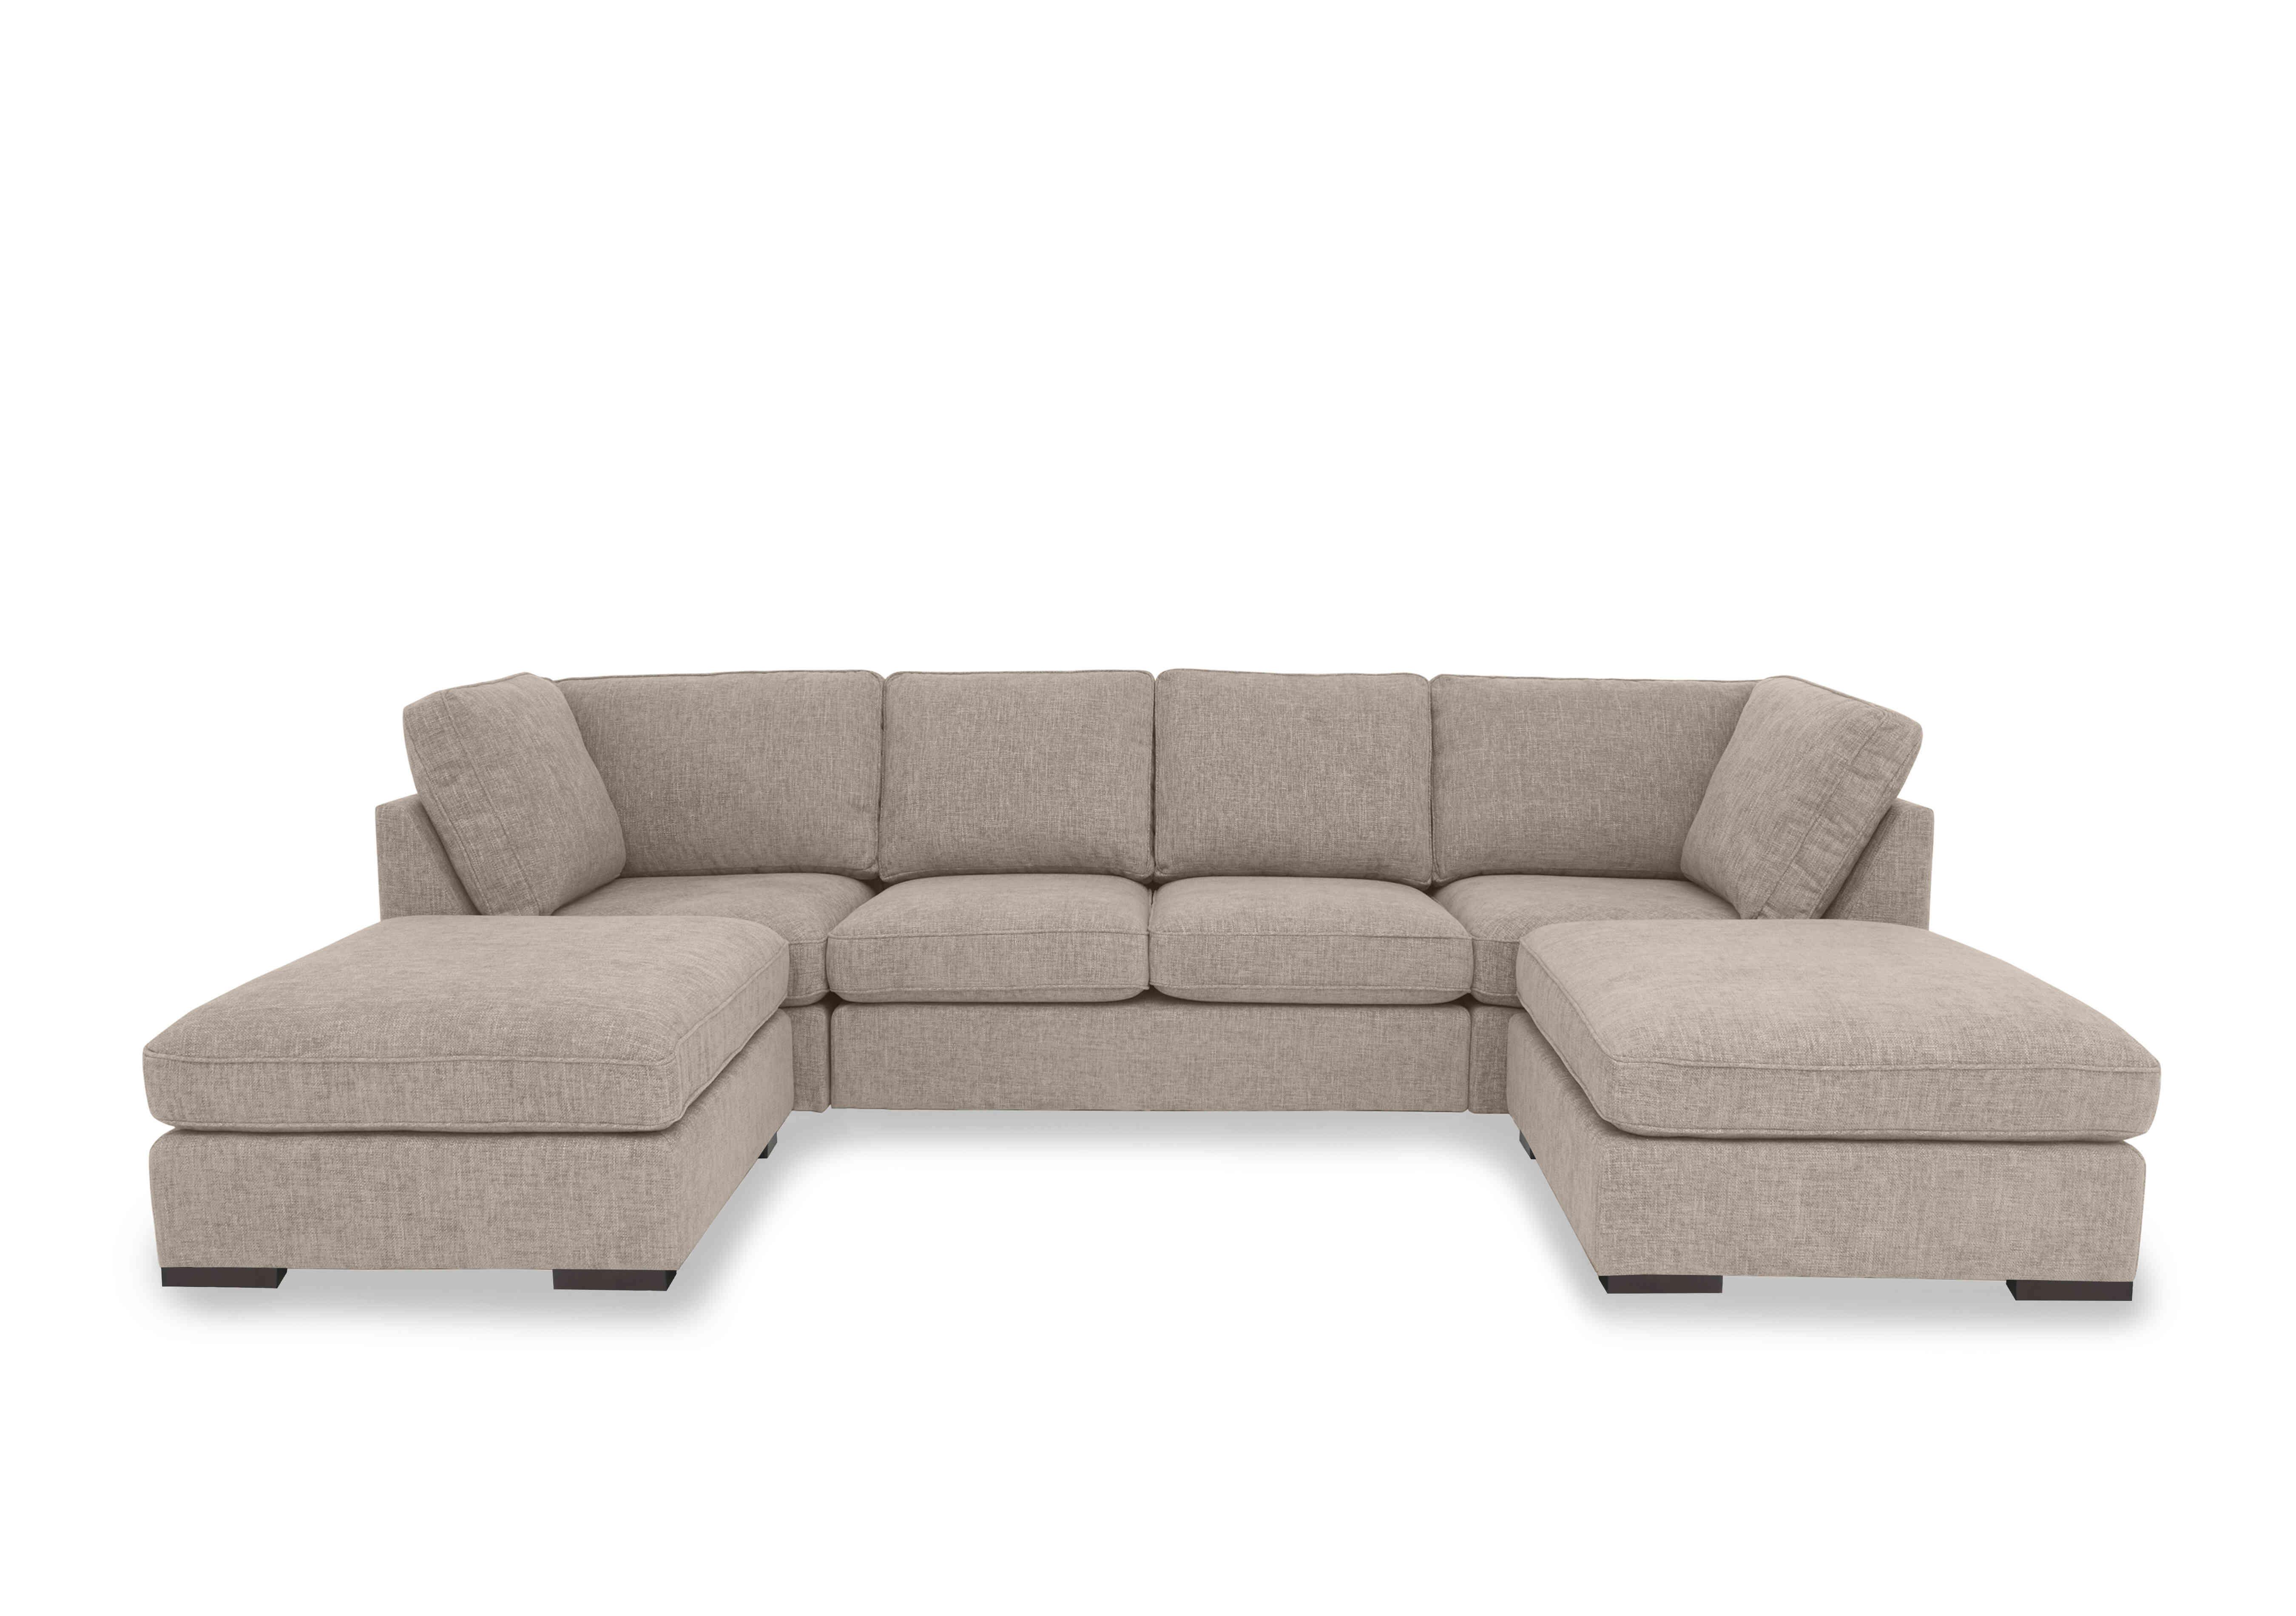 Ugo Large U-Shaped Corner Sofa in Anivia Khaki 14445 on Furniture Village